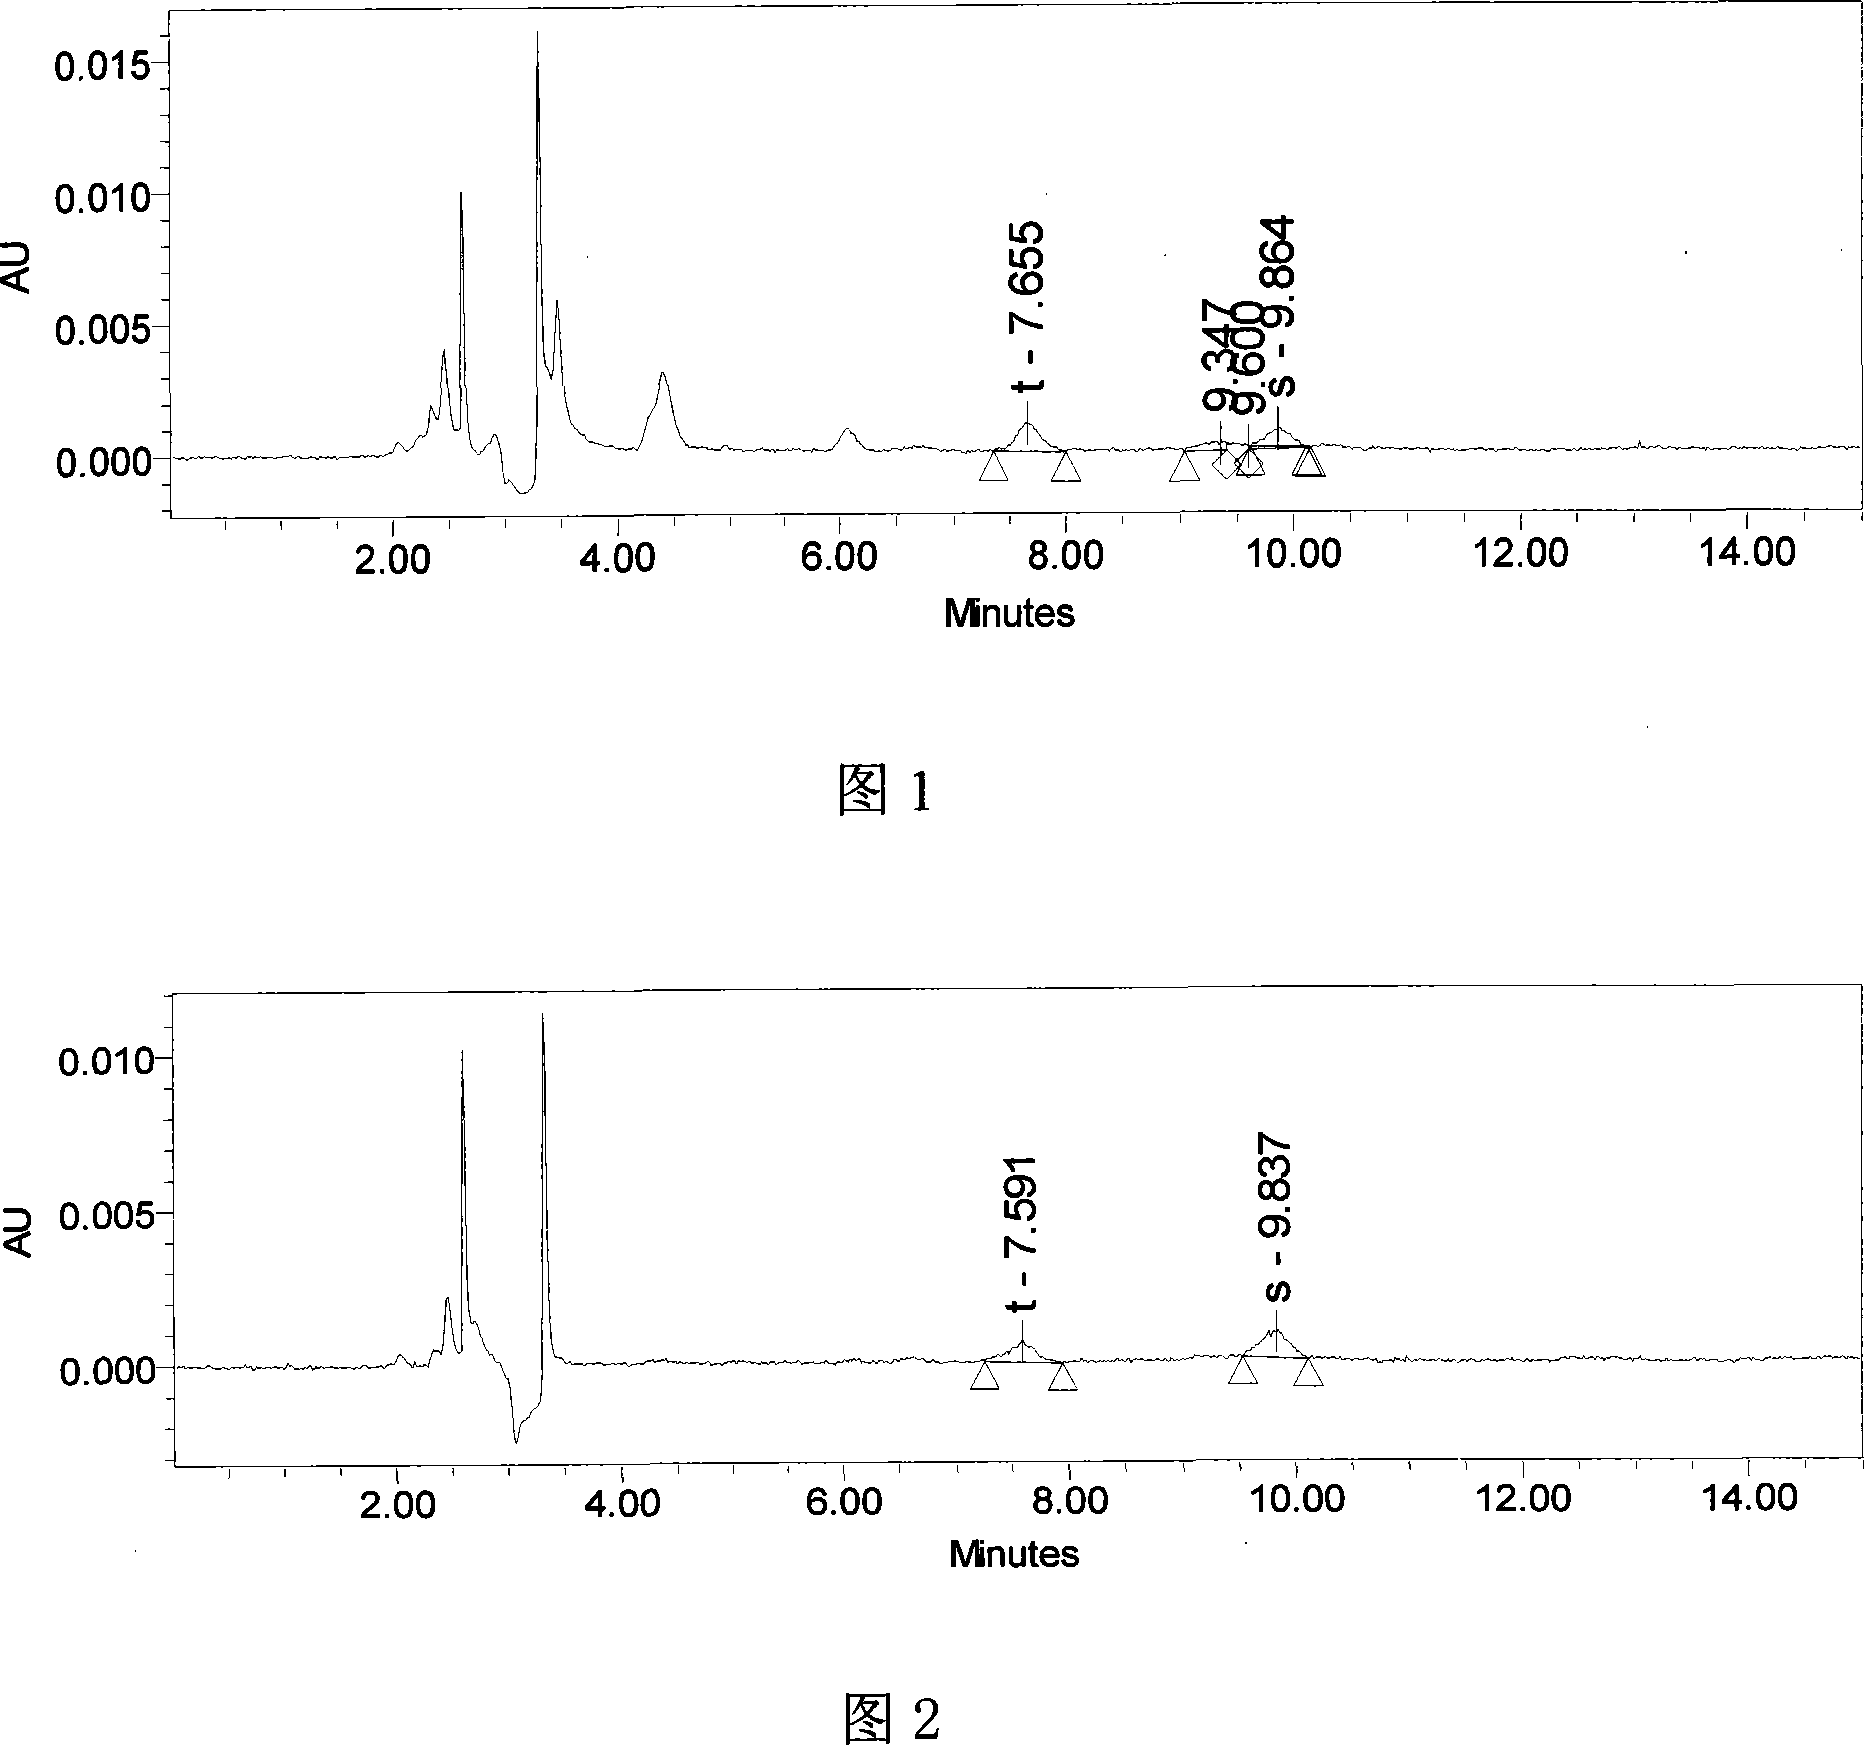 Tsiklomitsin molecular engram polyalcohol and uses of the same